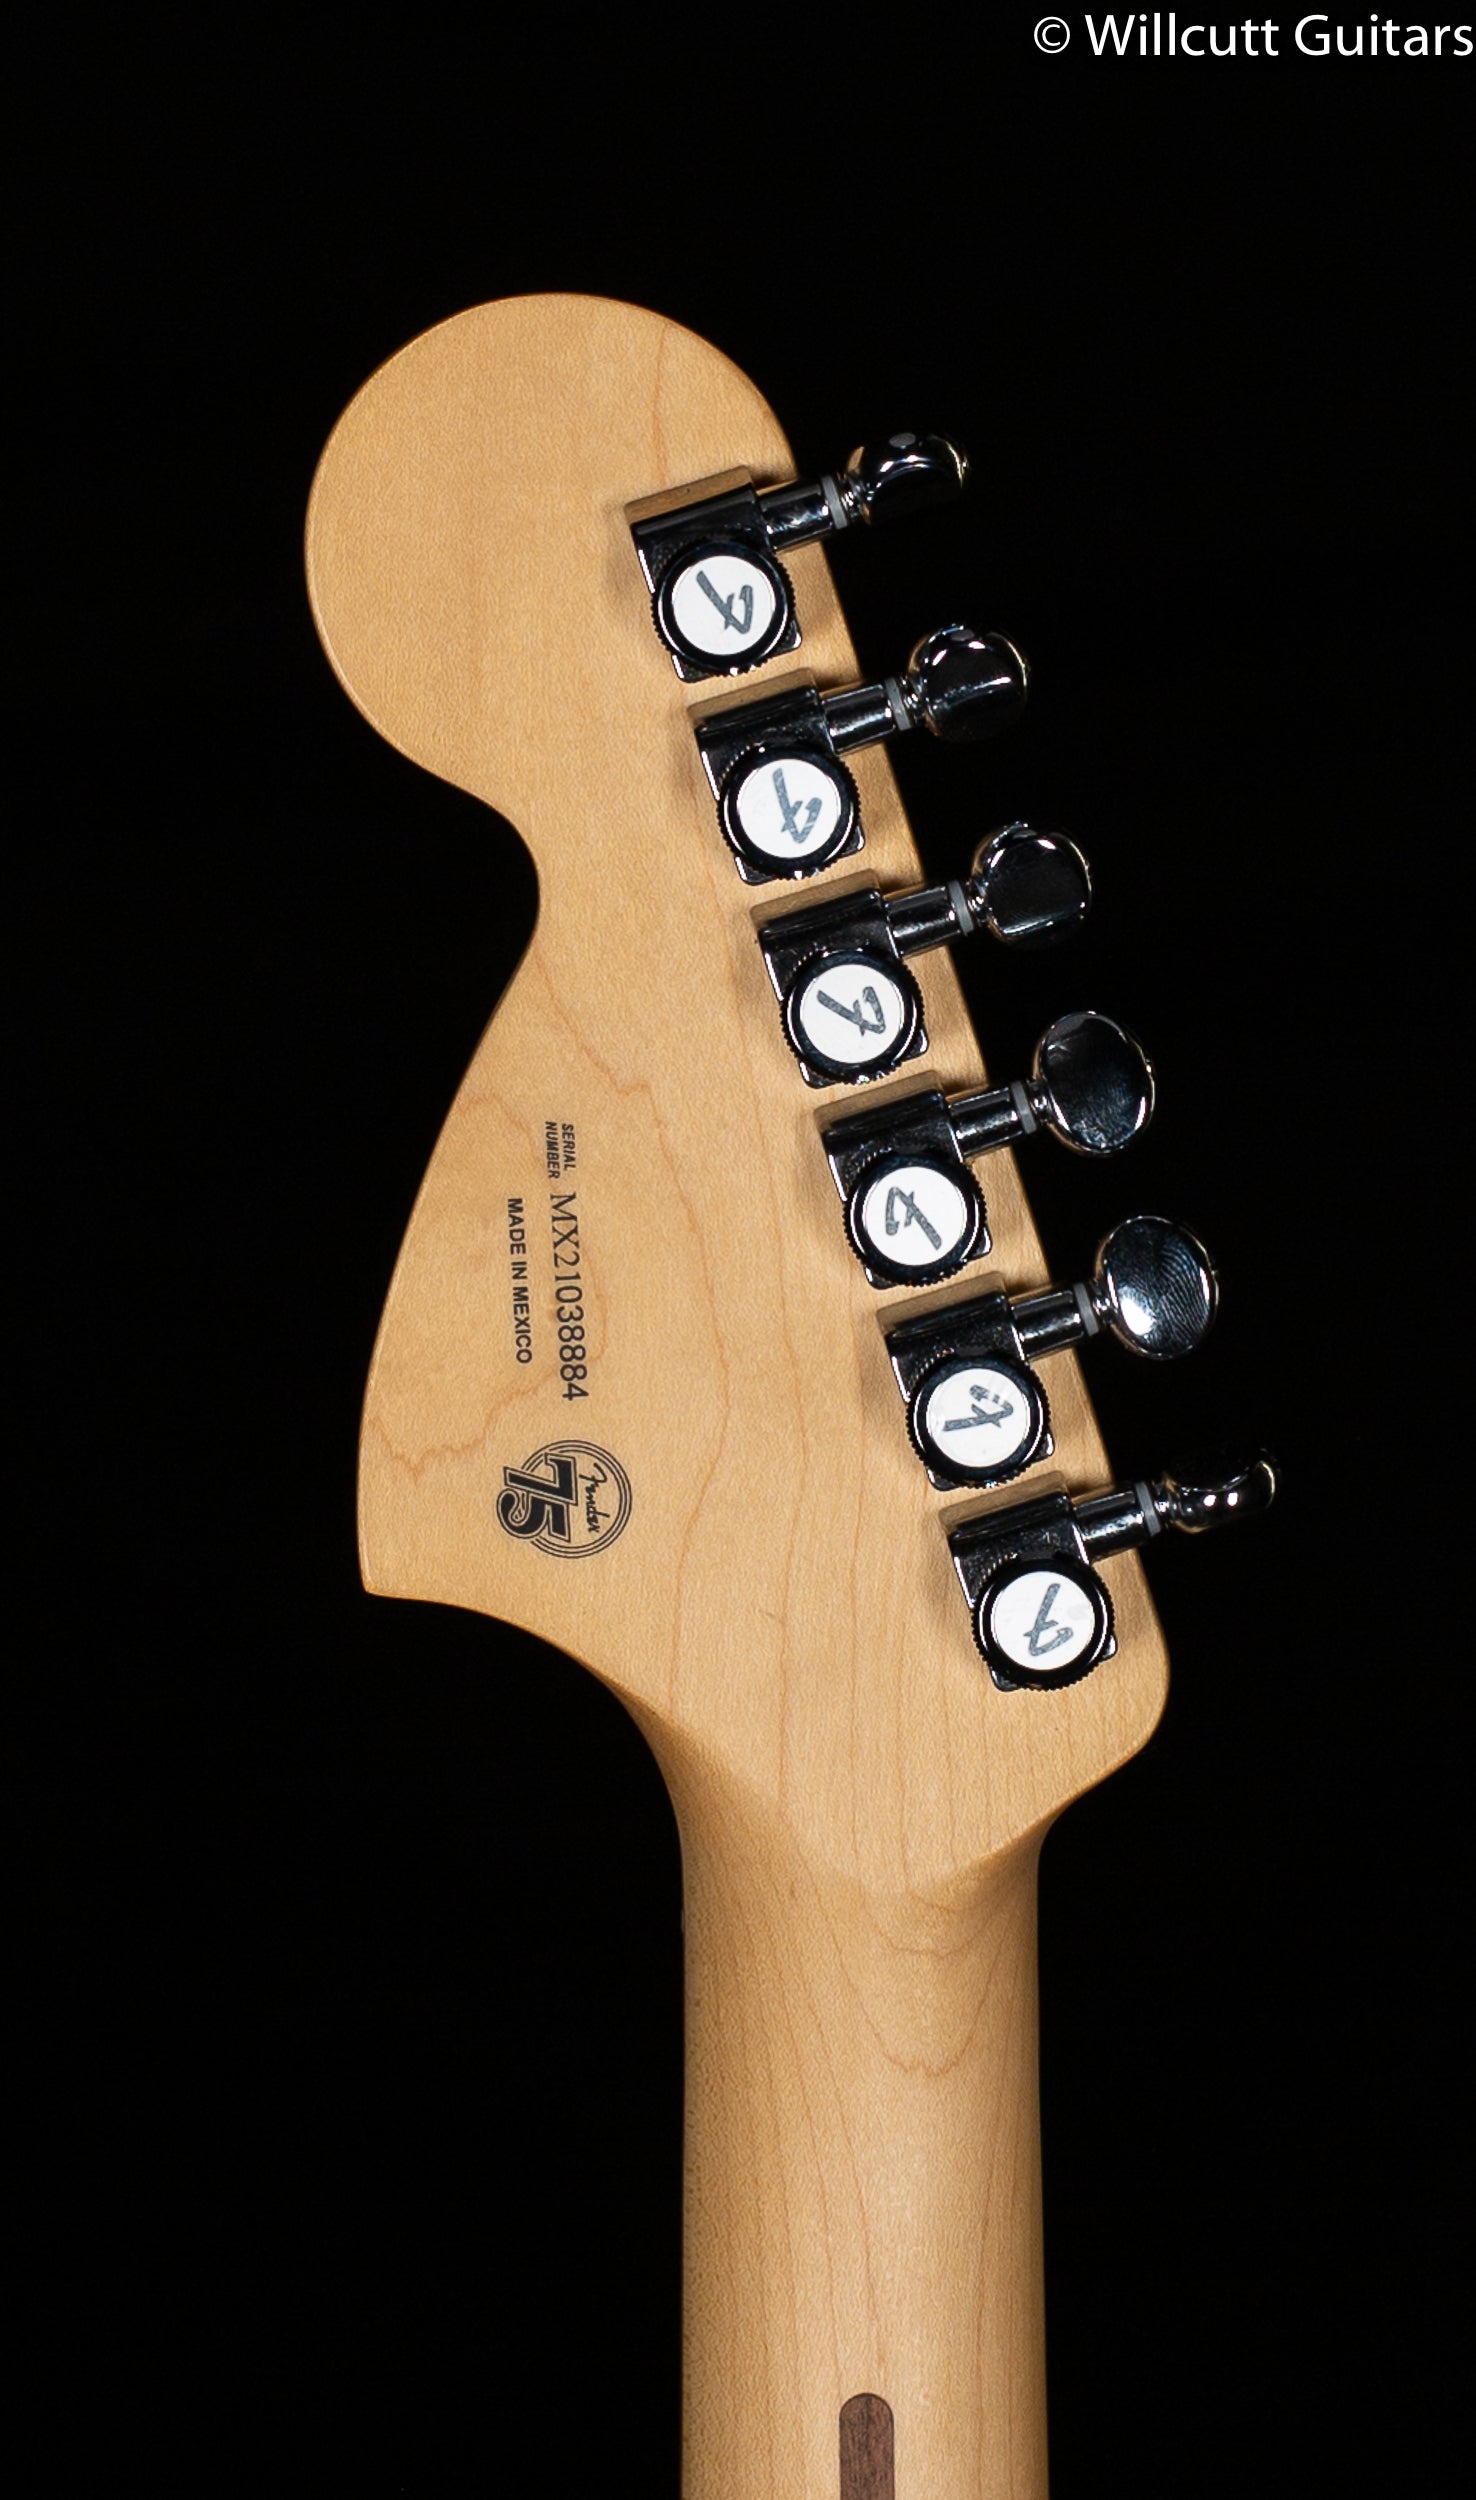 Fender Deluxe Hanging Guitar Stand, Black/Red - Willcutt Guitars